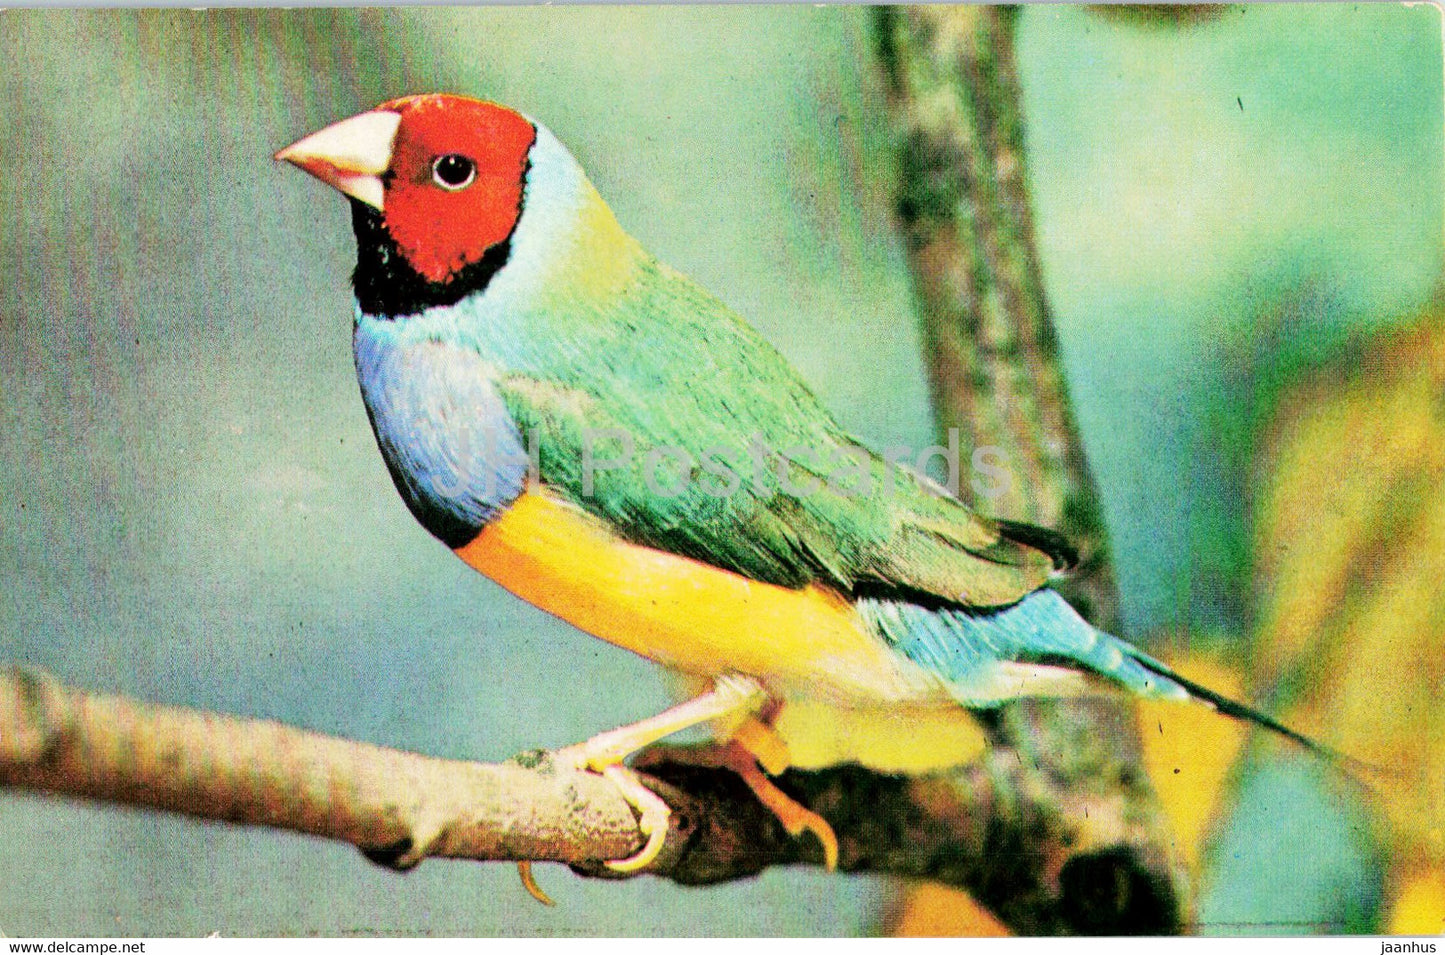 Gouldian finch - Chloebia gouldiae - birds - 1983 - Russia USSR - unused - JH Postcards